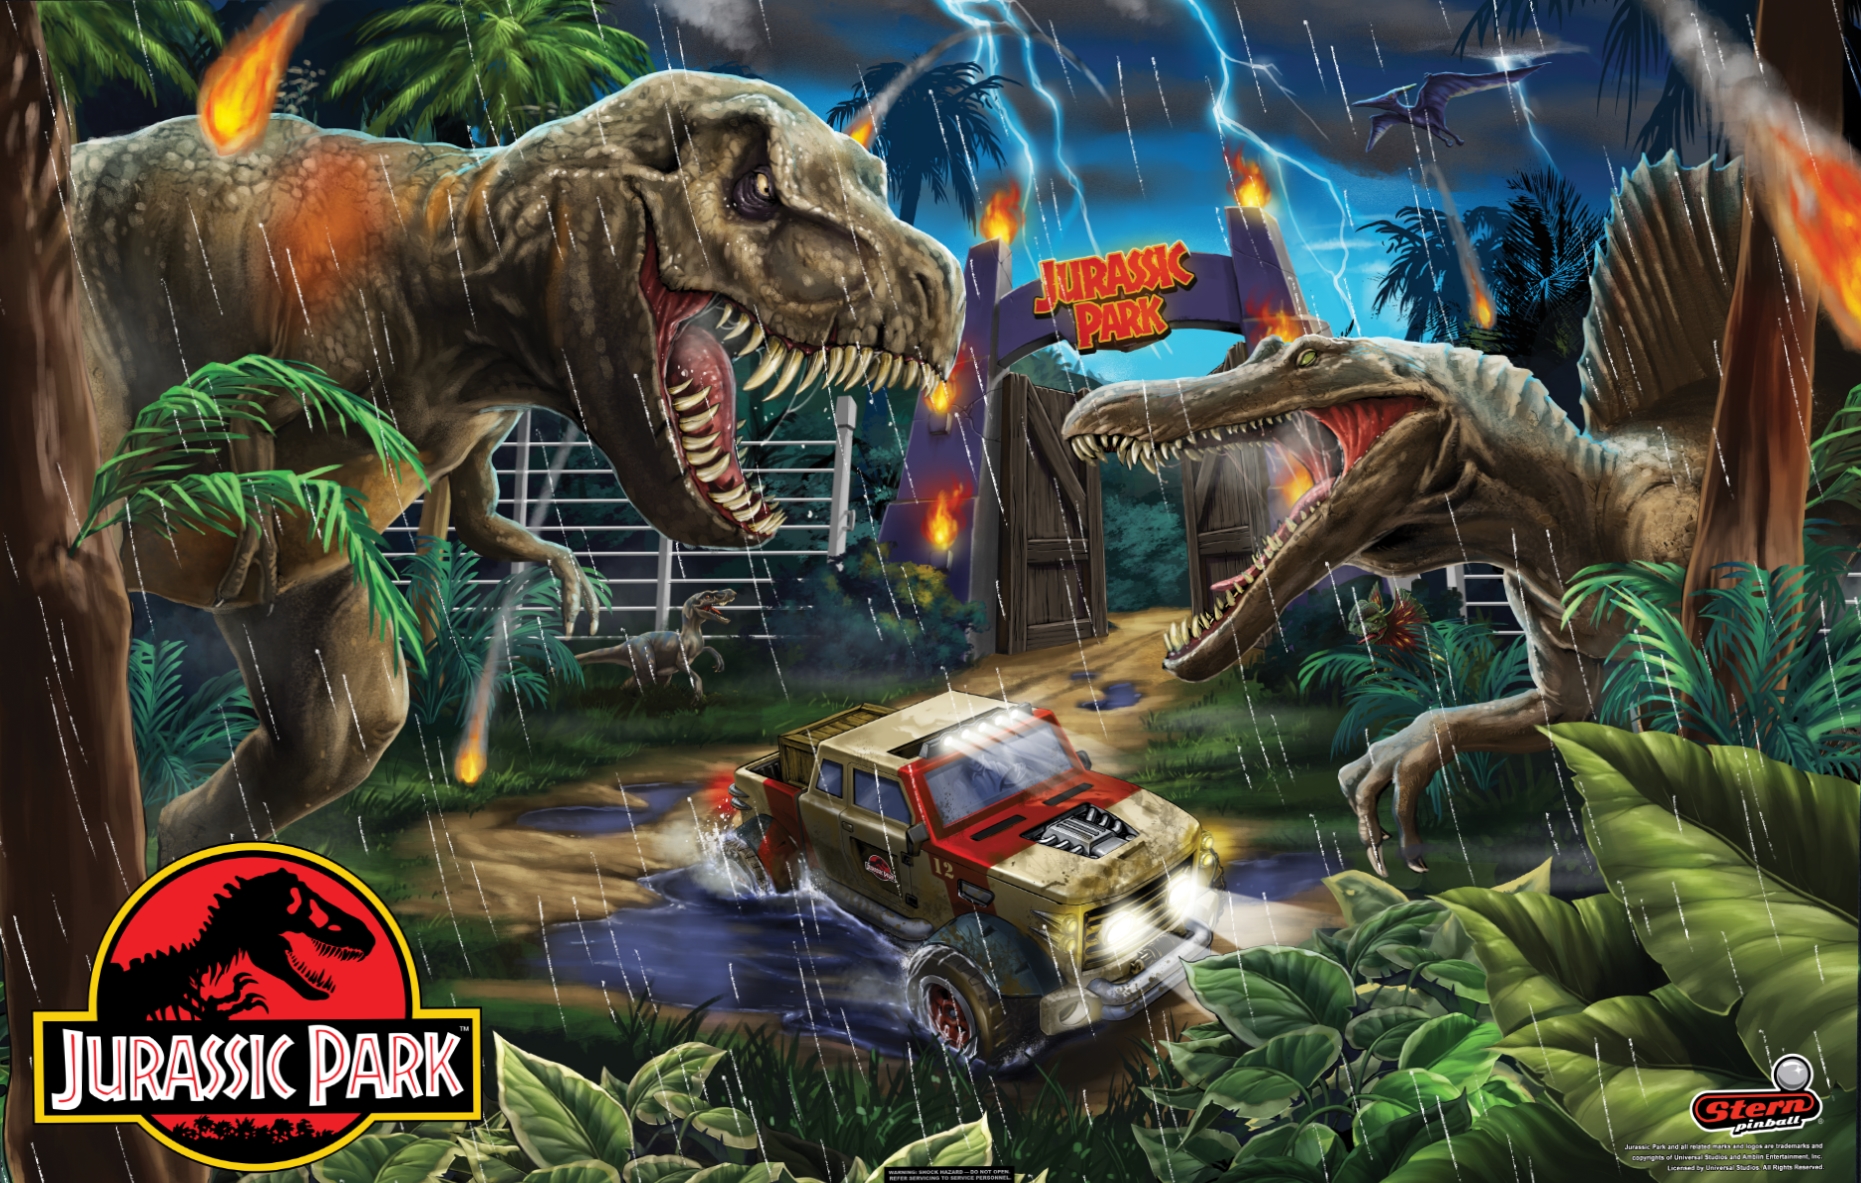 Stern Pinball Releases New Pinball Machine Dedicated To The Original Jurassic Park Trilogy